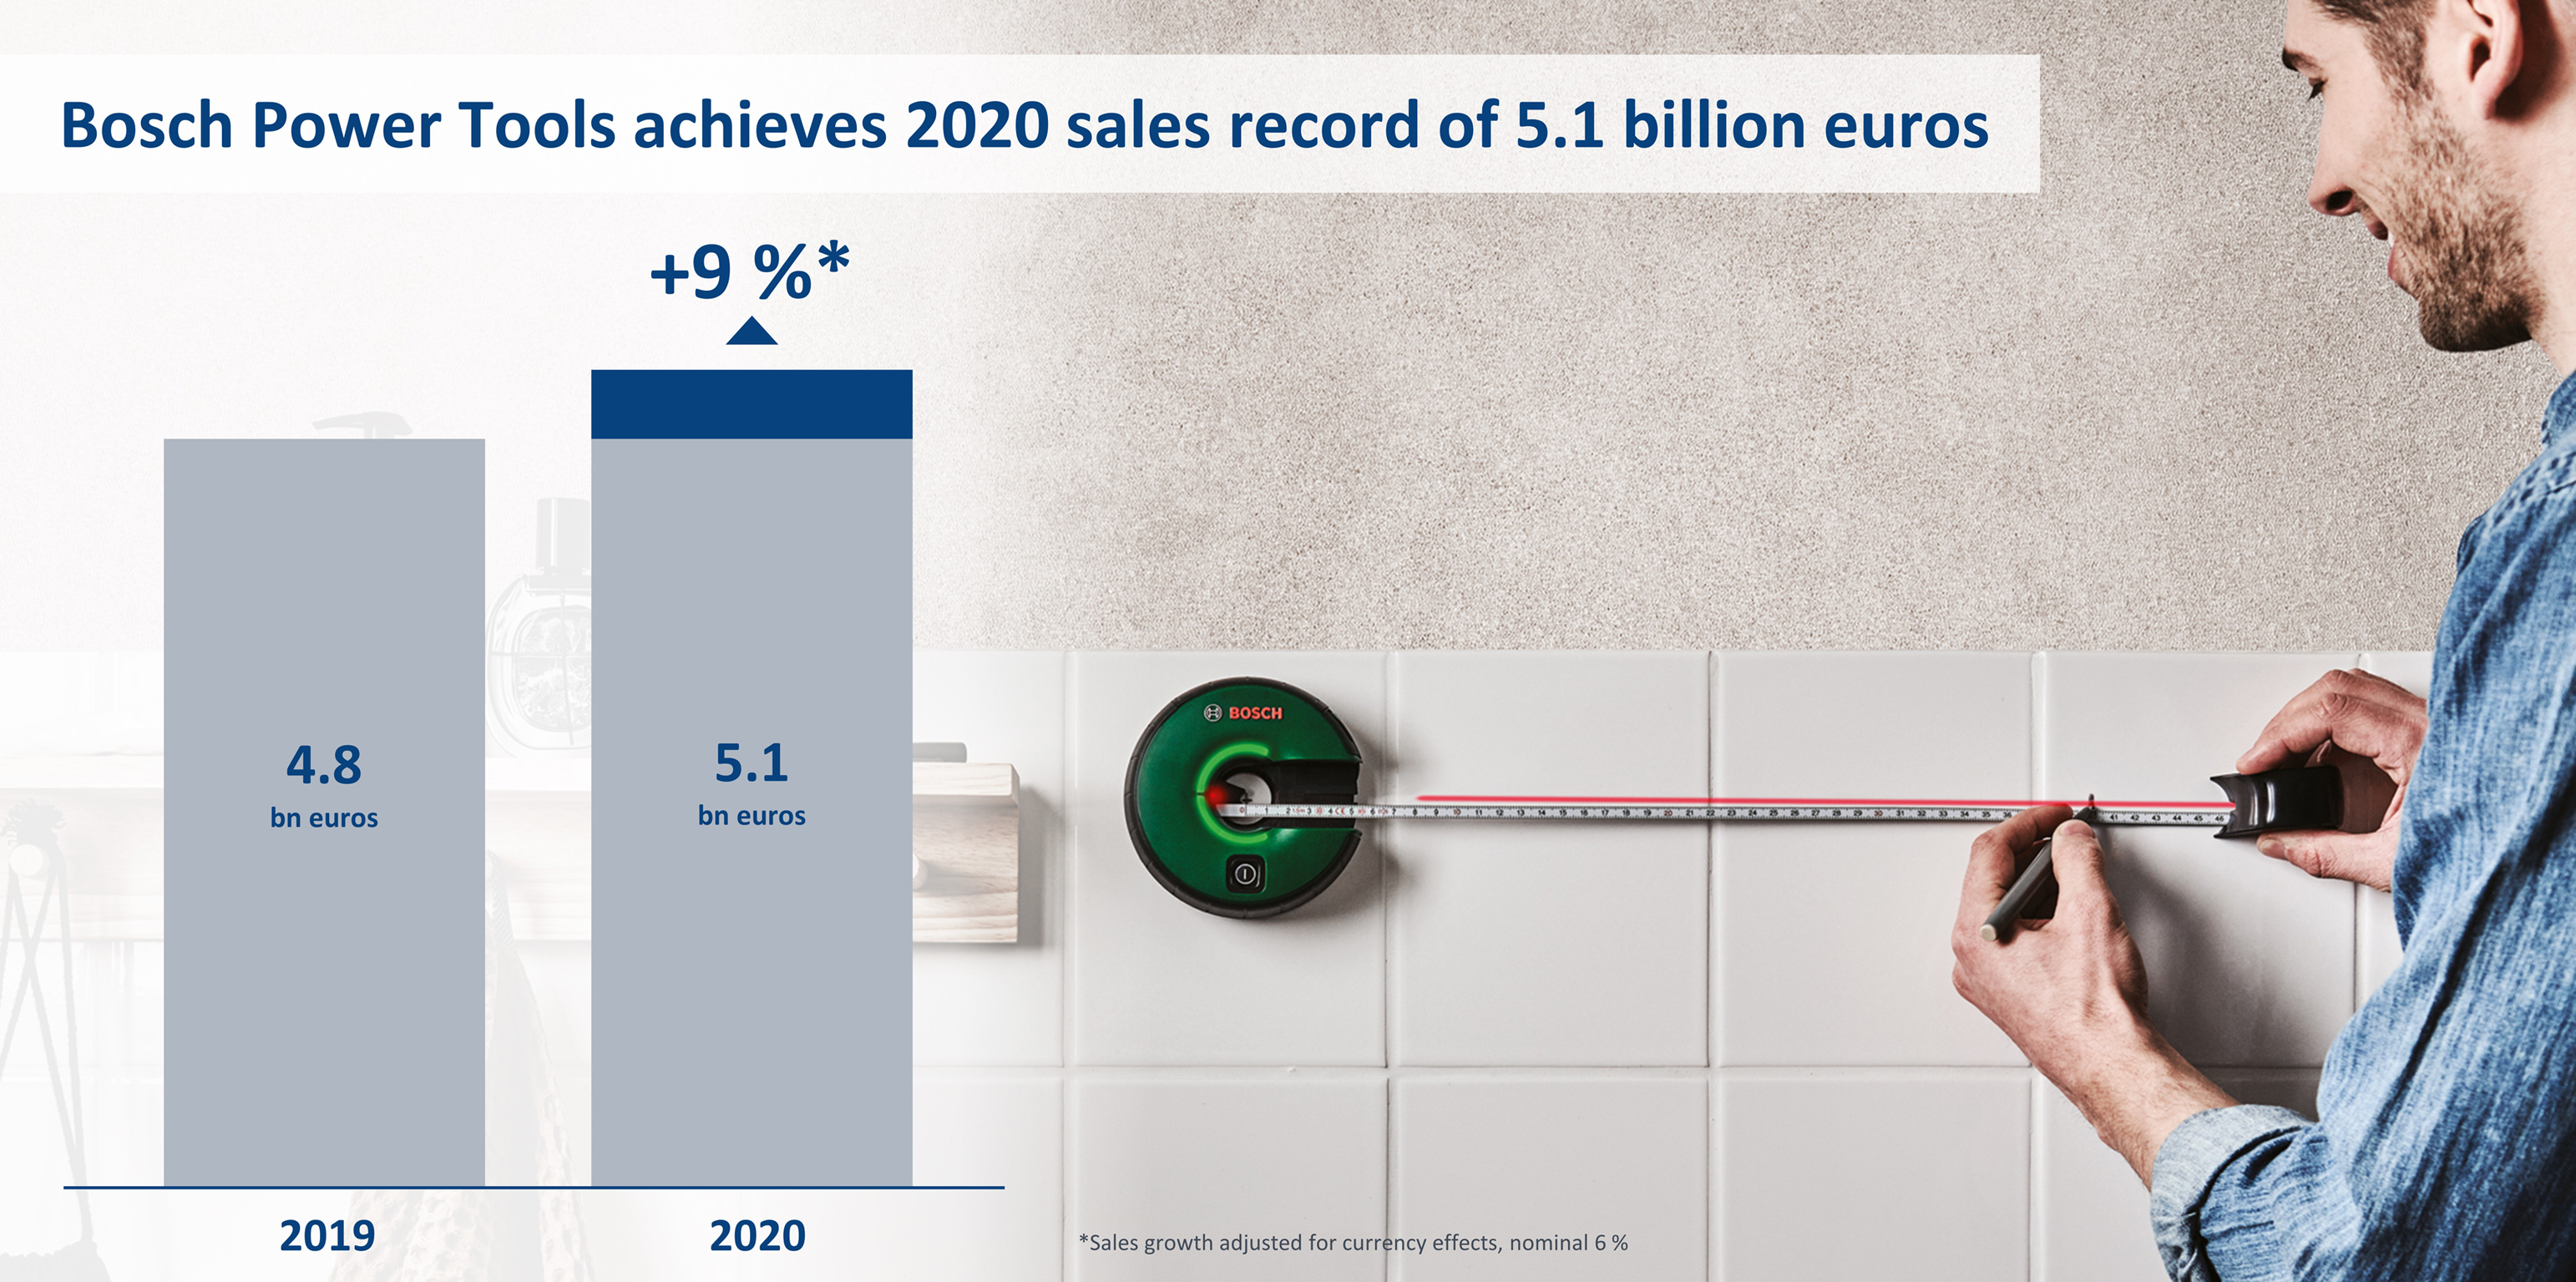 Bosch Power Tools achieves 2020 sales record of 5.1 billion euros